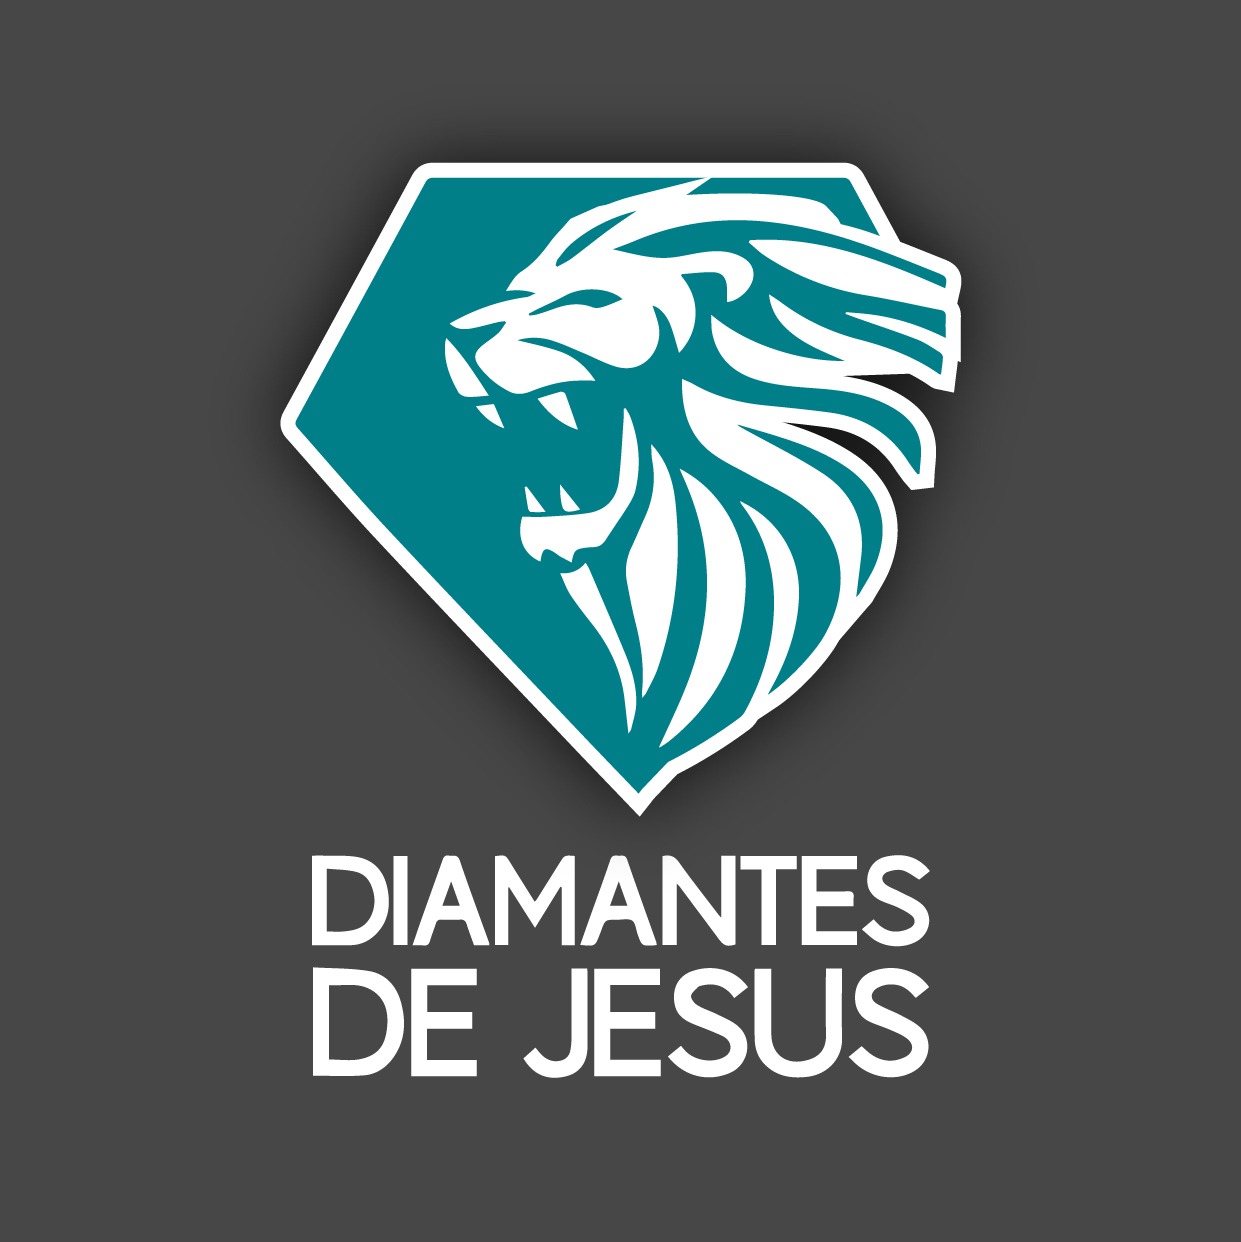 Diamantes de Jesus